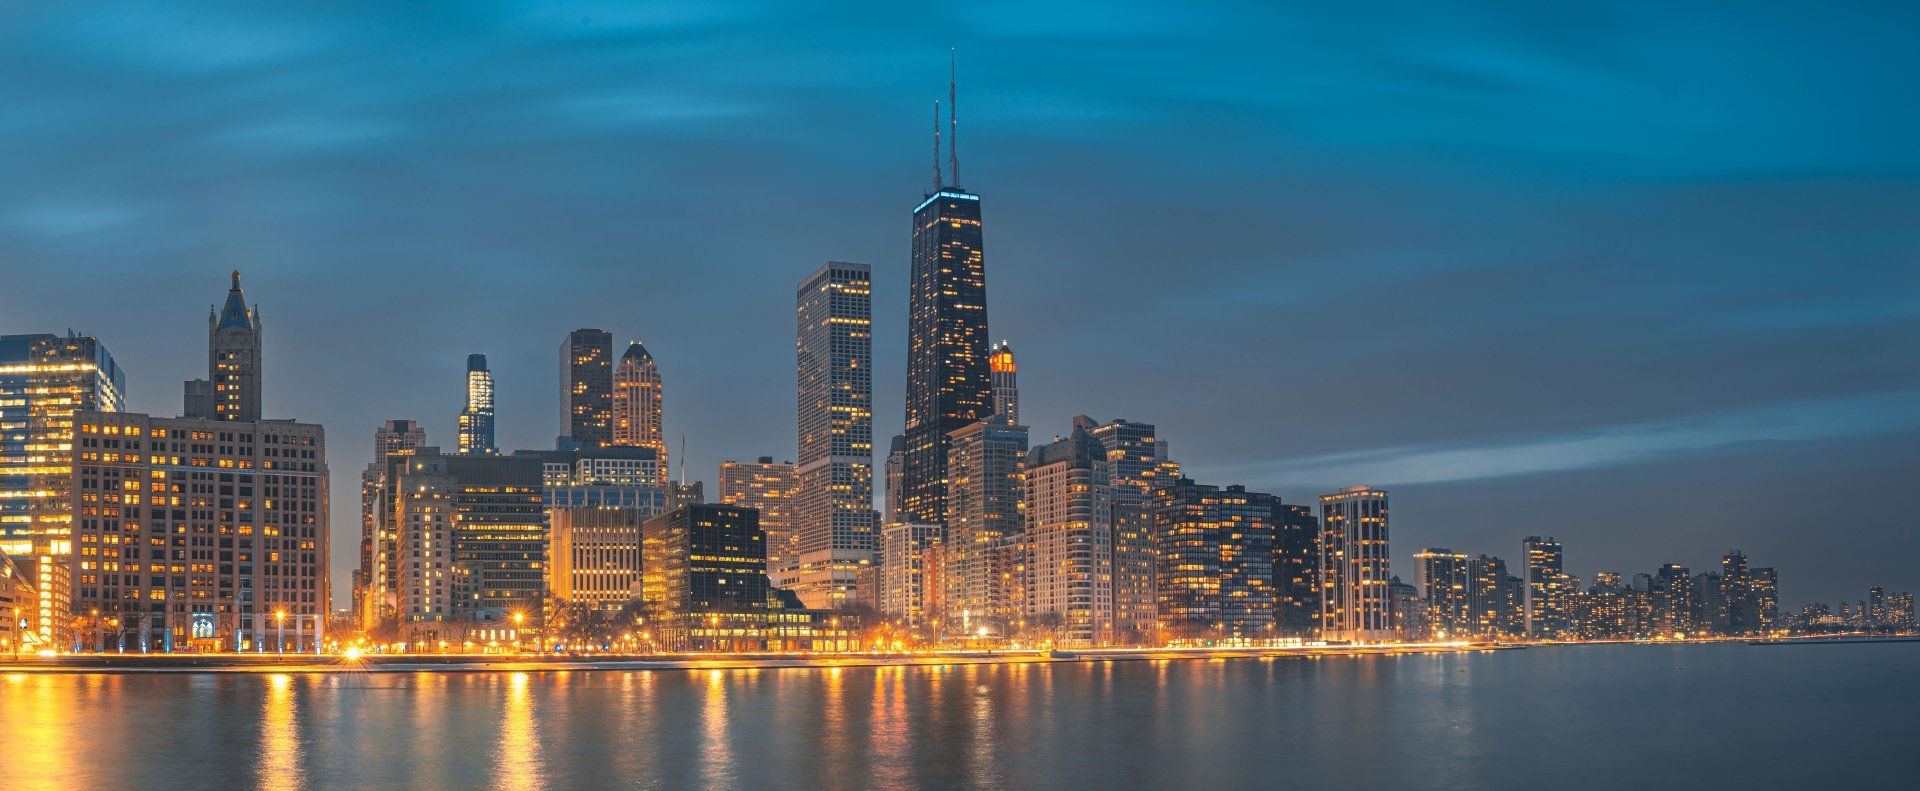 Download USA Skyscraper Building Man Made Chicago 4k Ultra HD Wallpaper